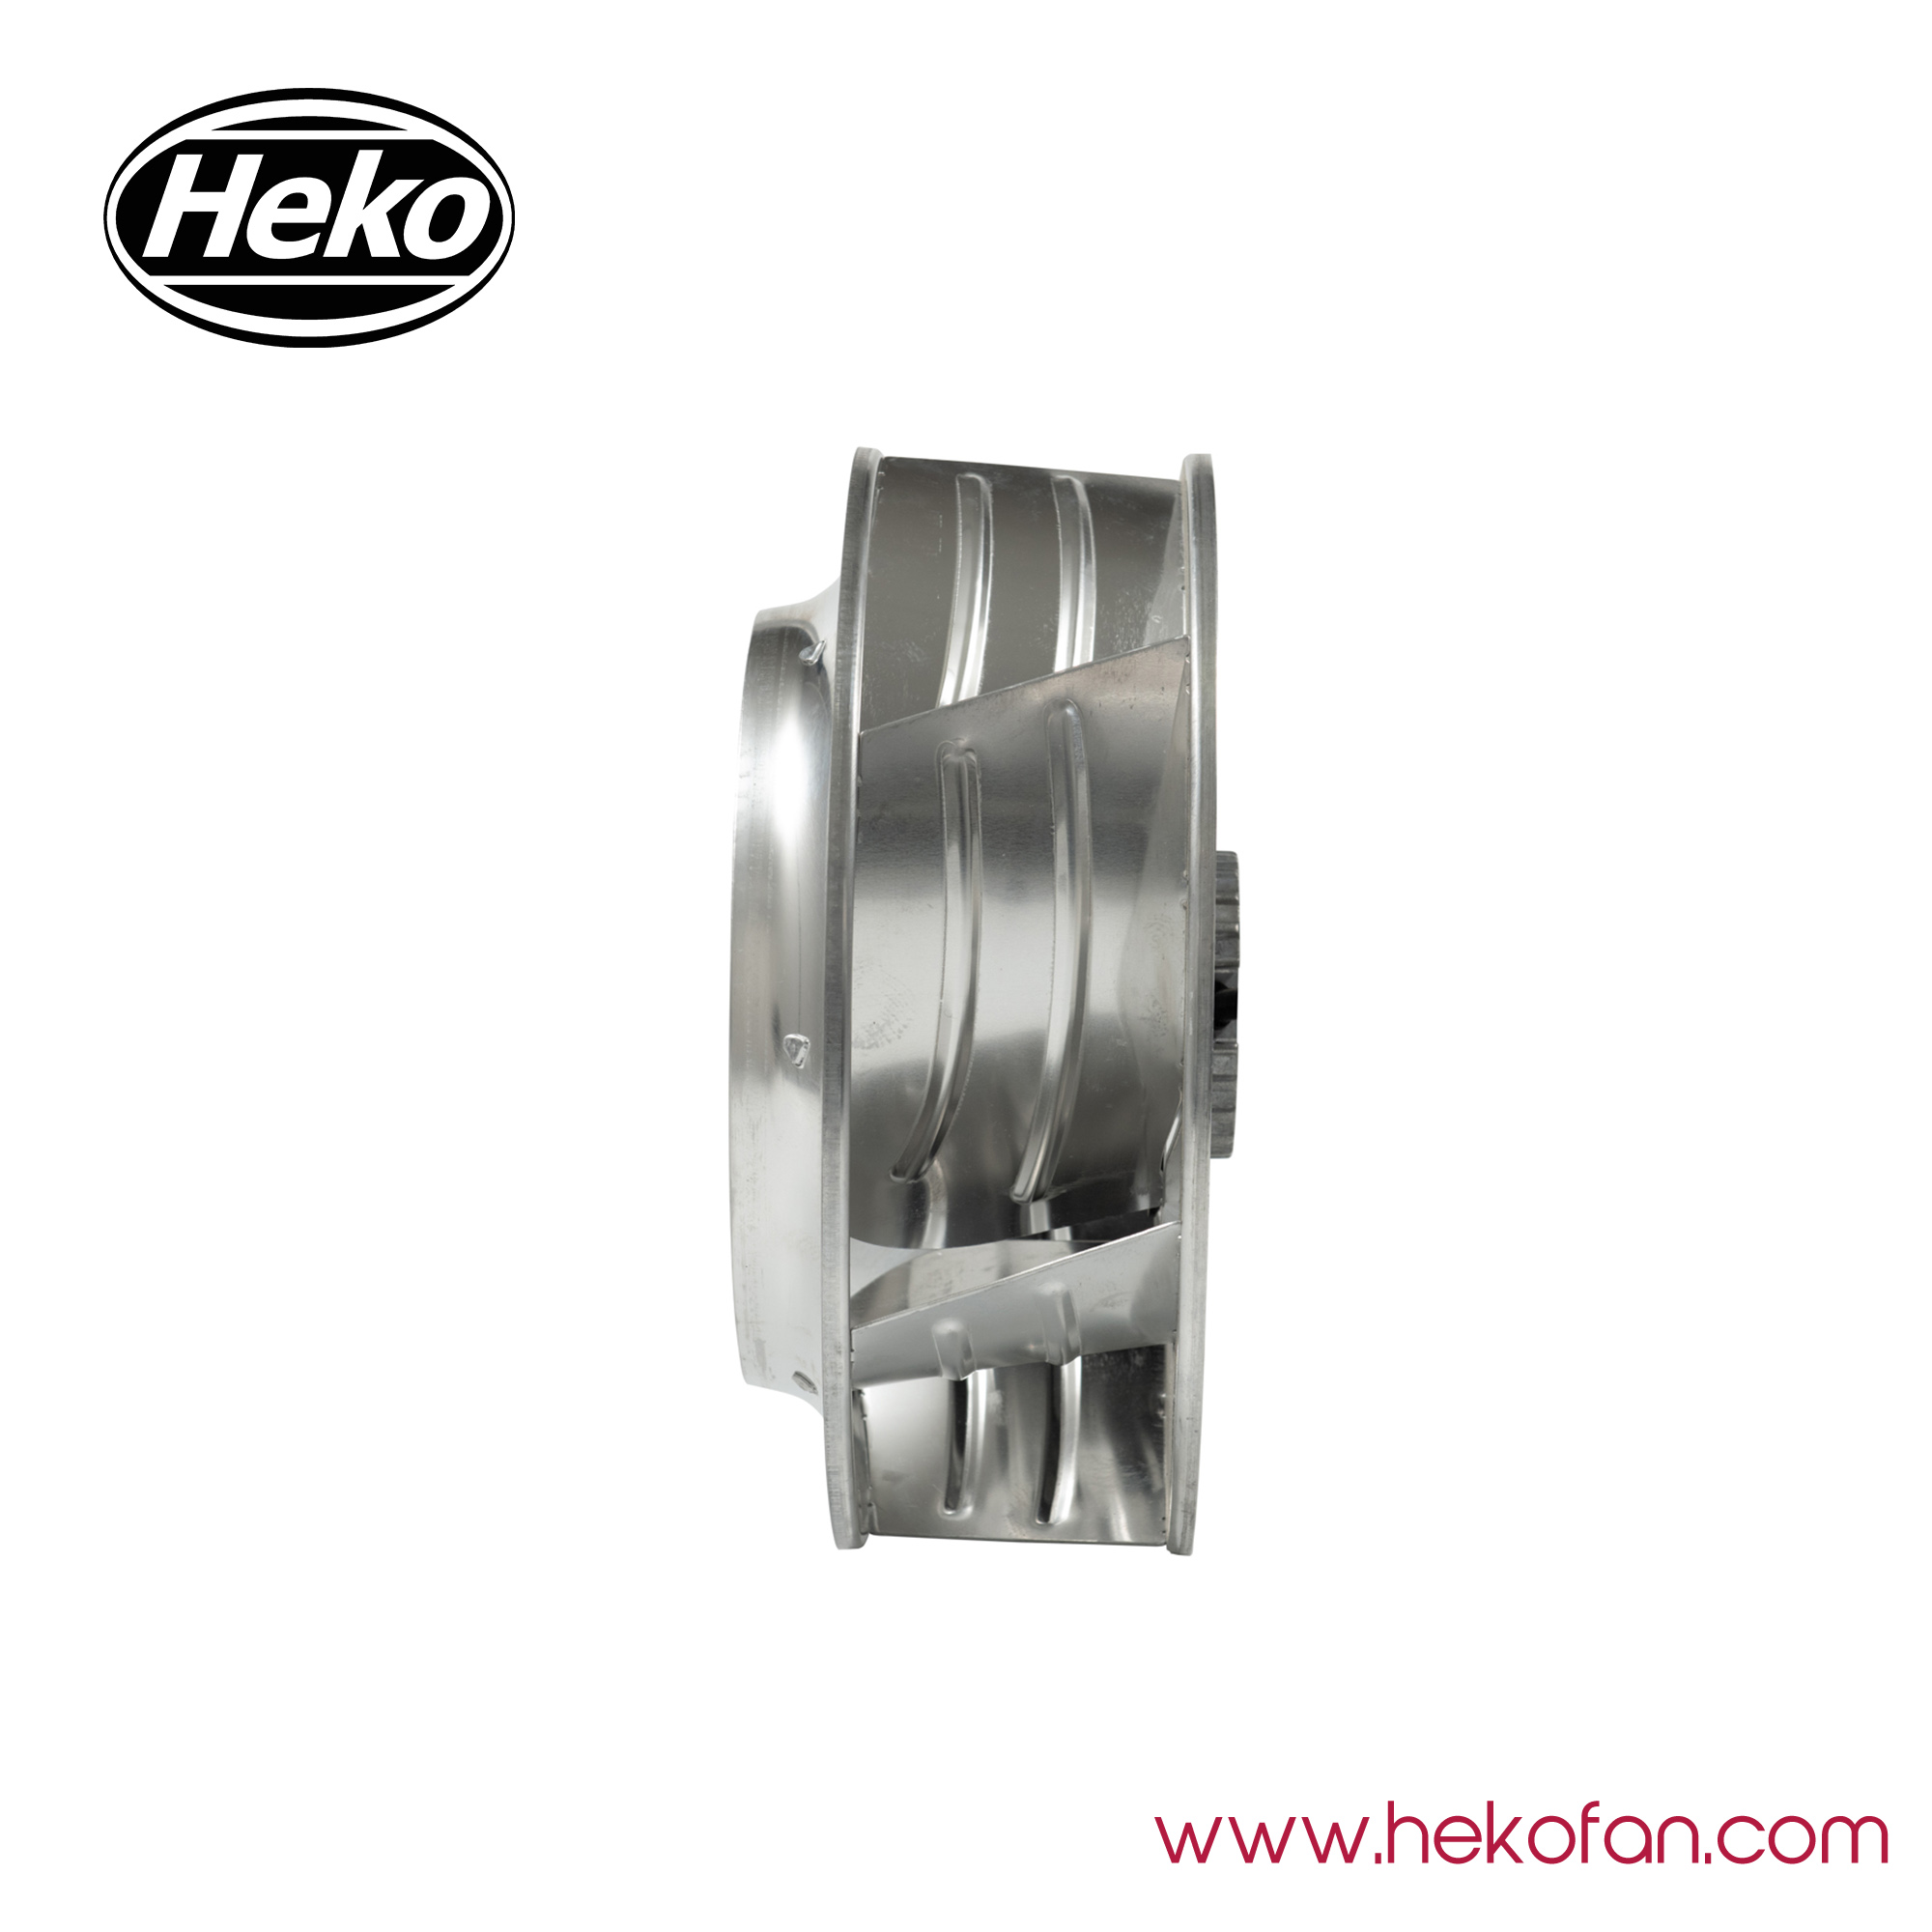 HEKO DC102mm High Pressure Blowers Centrifugal Fan